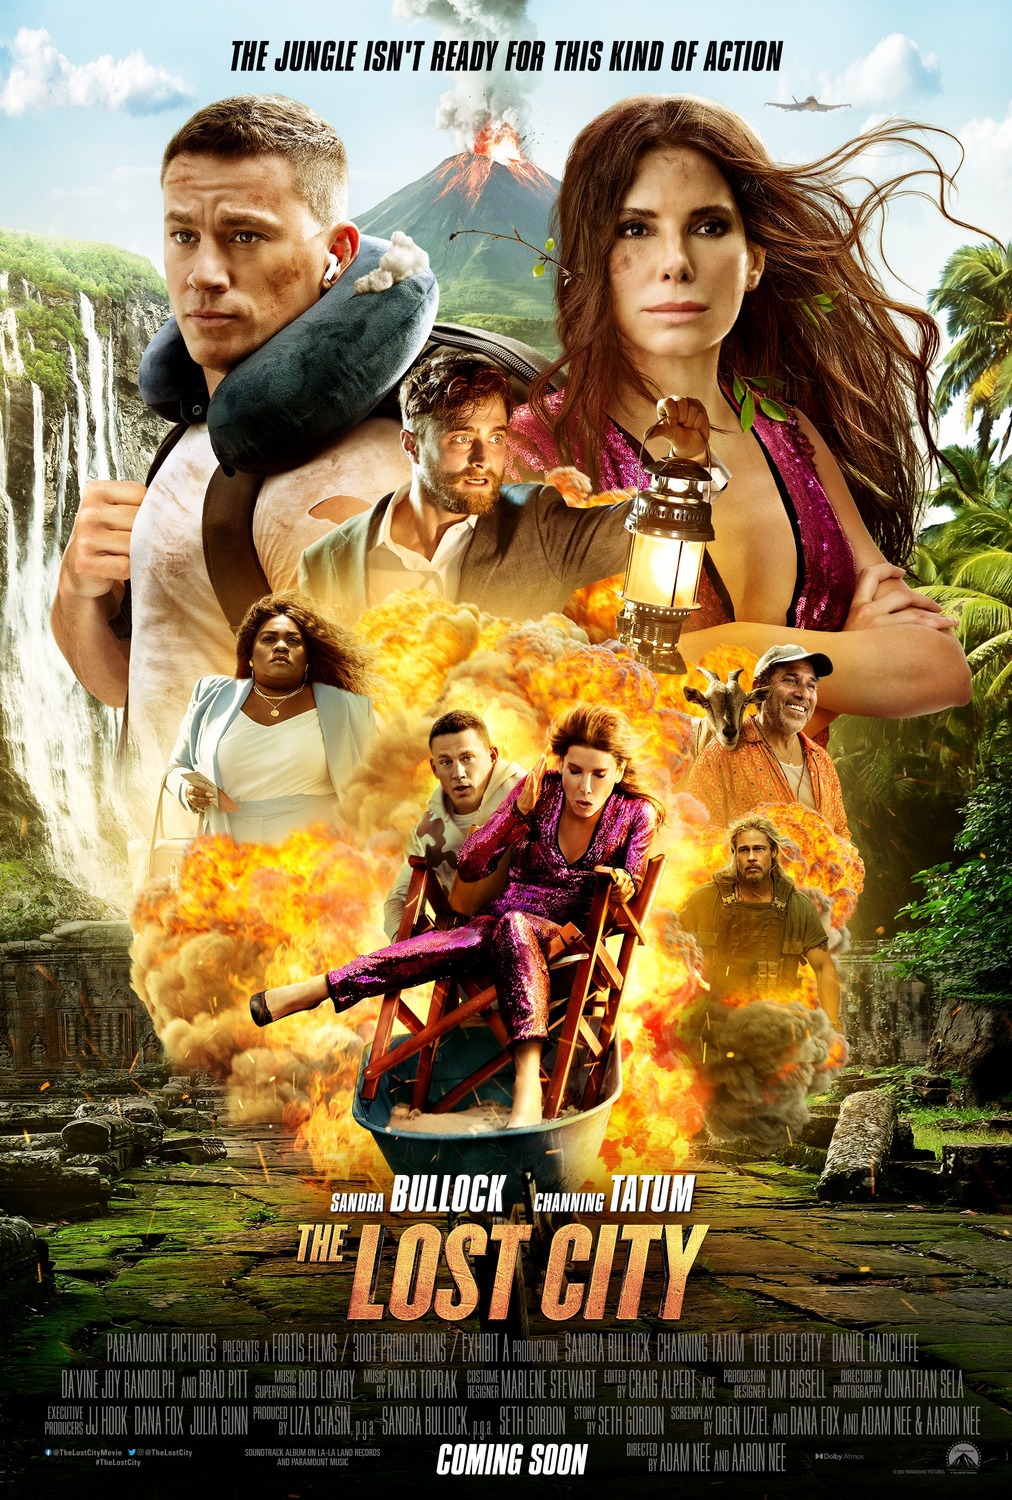 The Lost City movie poster starring Sandra Bullock and Channing Tatum